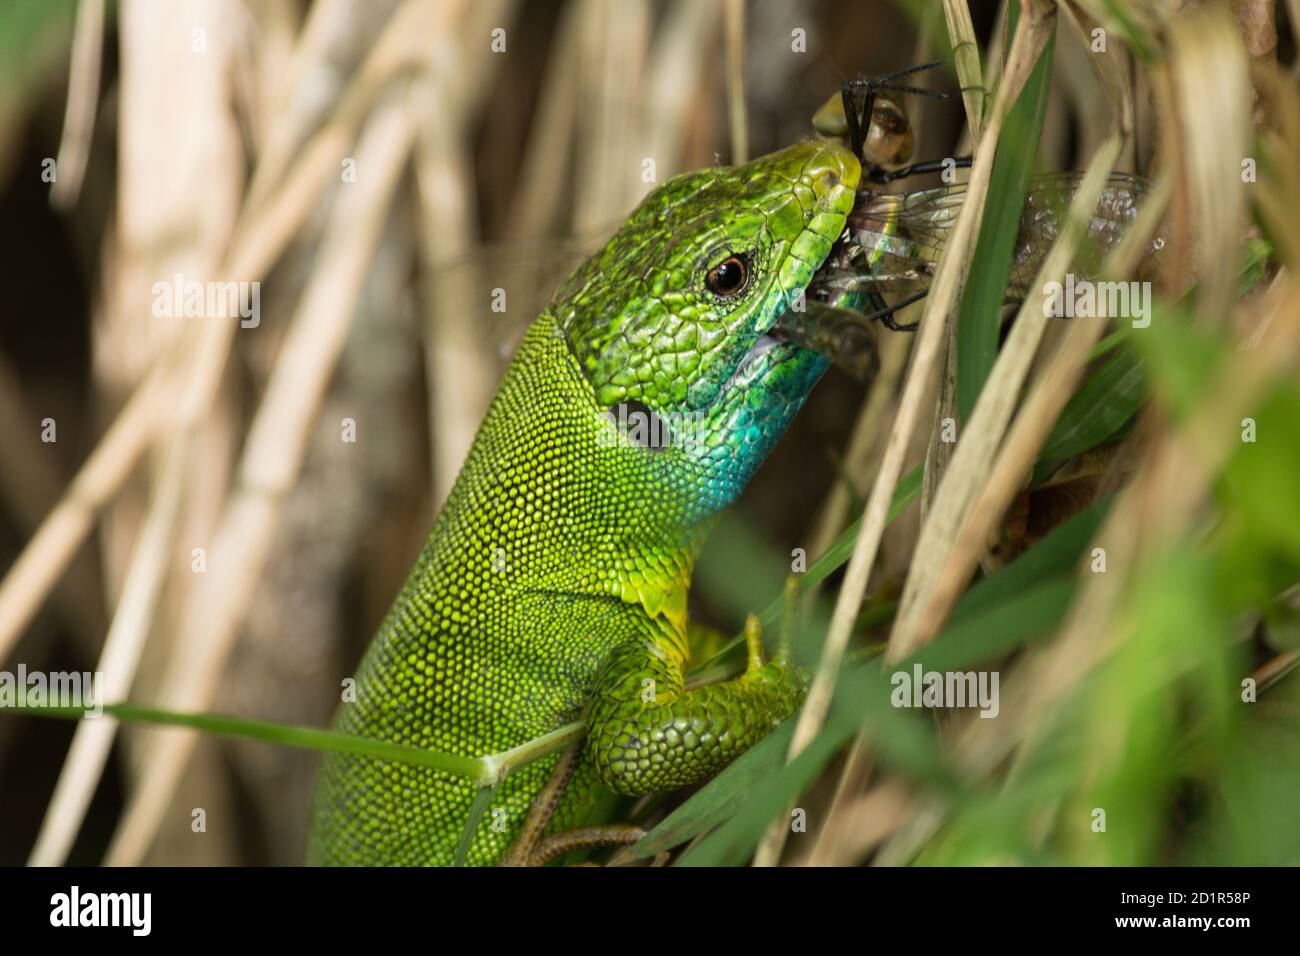 Close up of  Western Green Lizard (Lacerta bilineata) eating an insect. Croatia, Europe Stock Photo